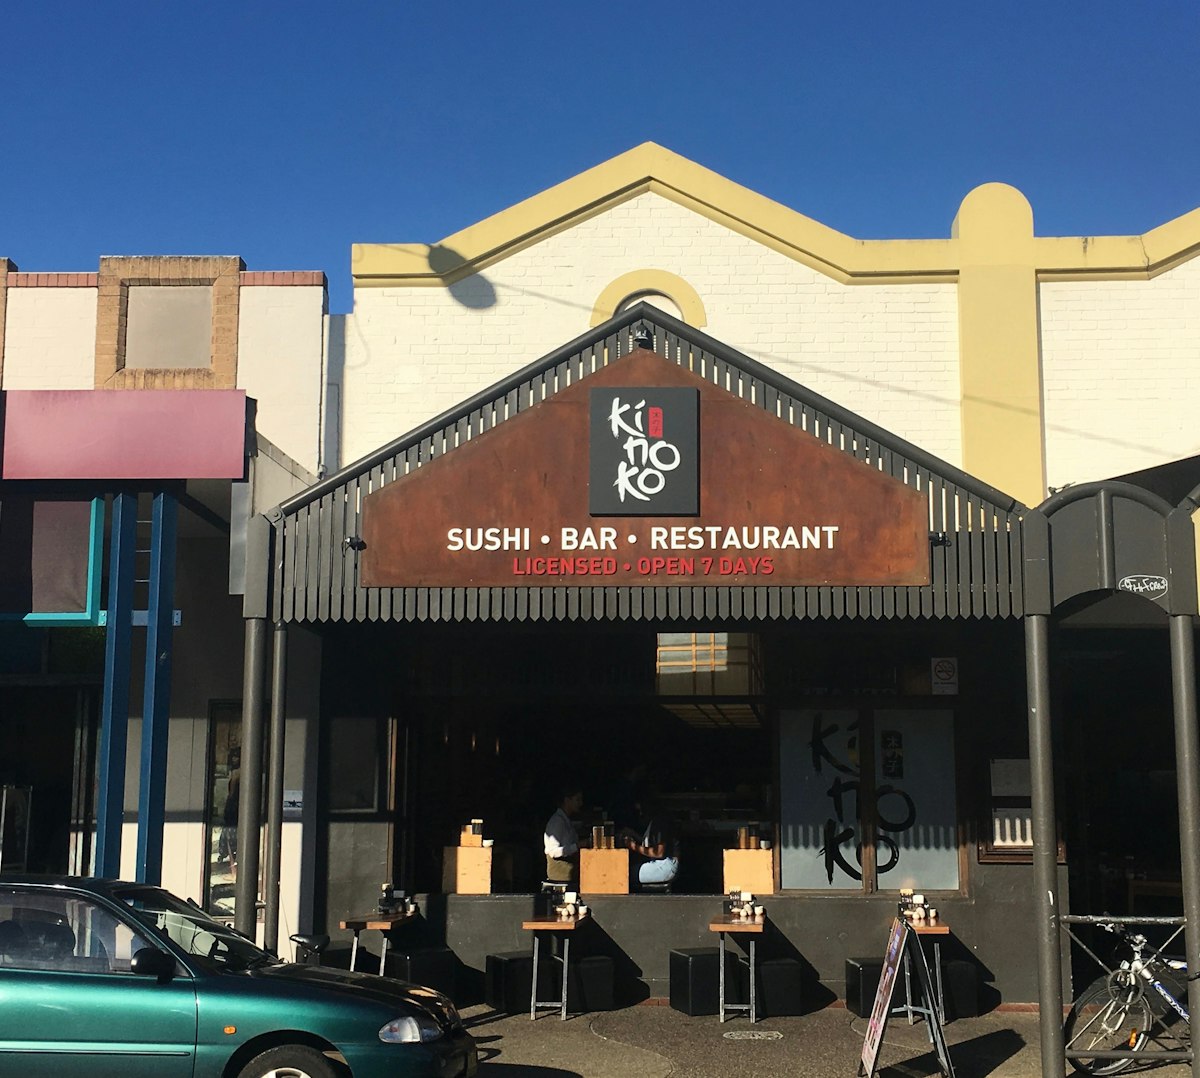 The popular sushi bar has a prime spot on Byron's main street